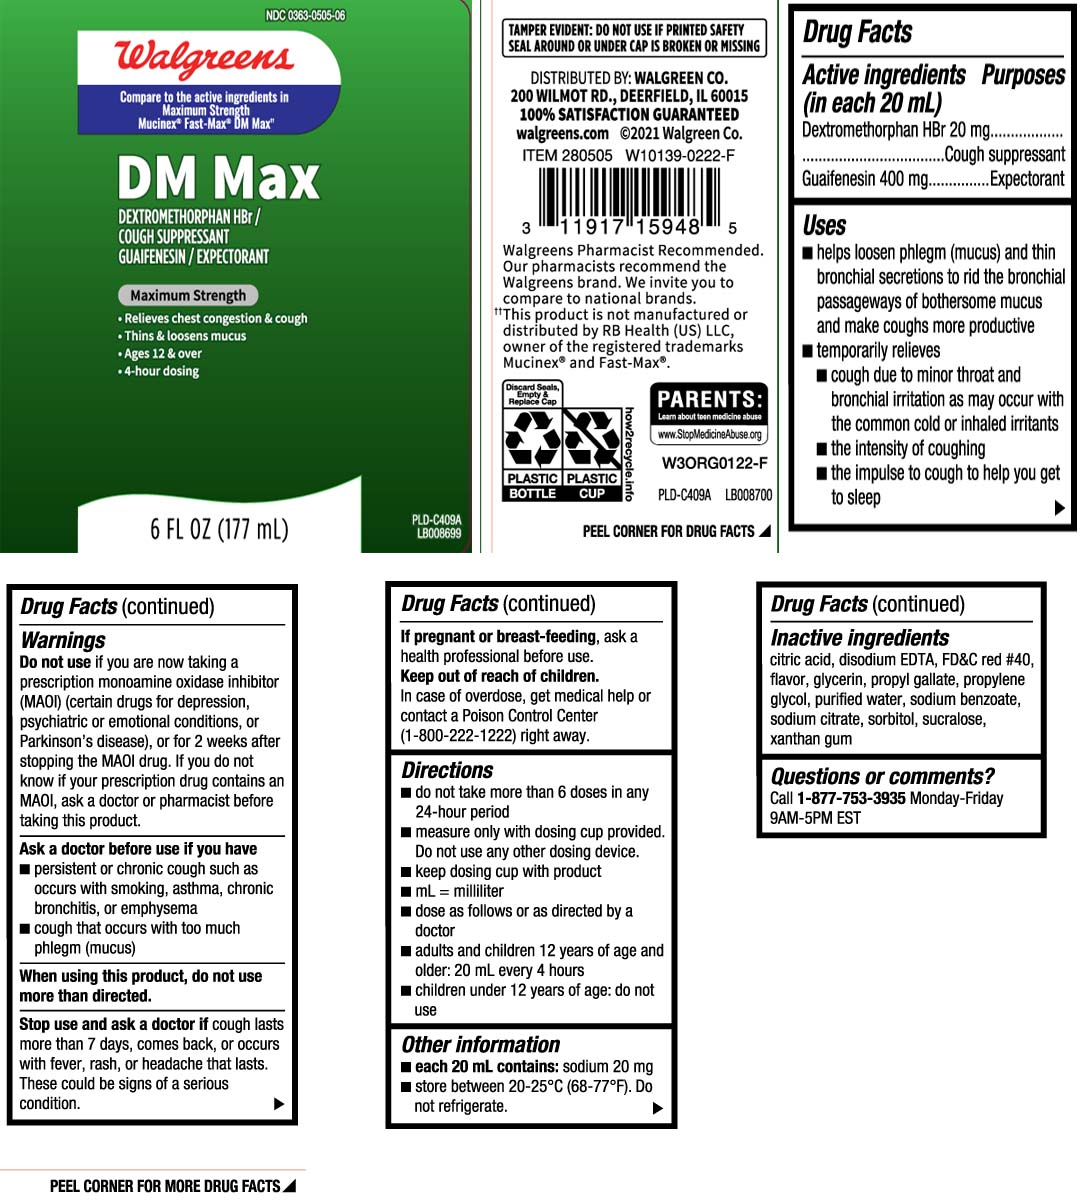 Dextromethorphan HBr 20 mg, Guaifenesin 400 mg